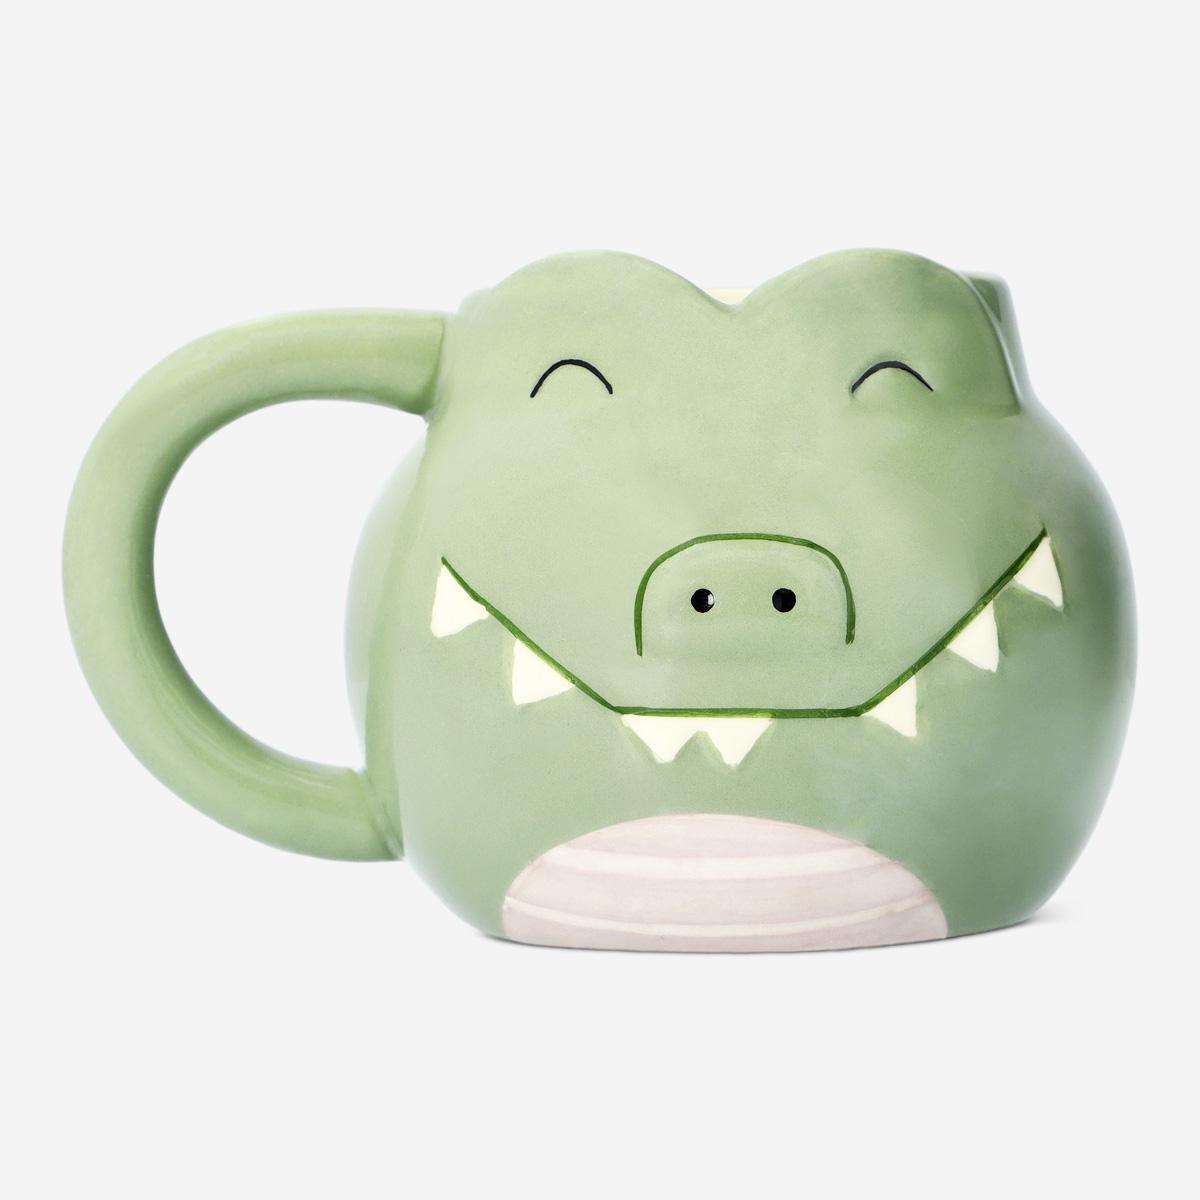 Green crocodile cup